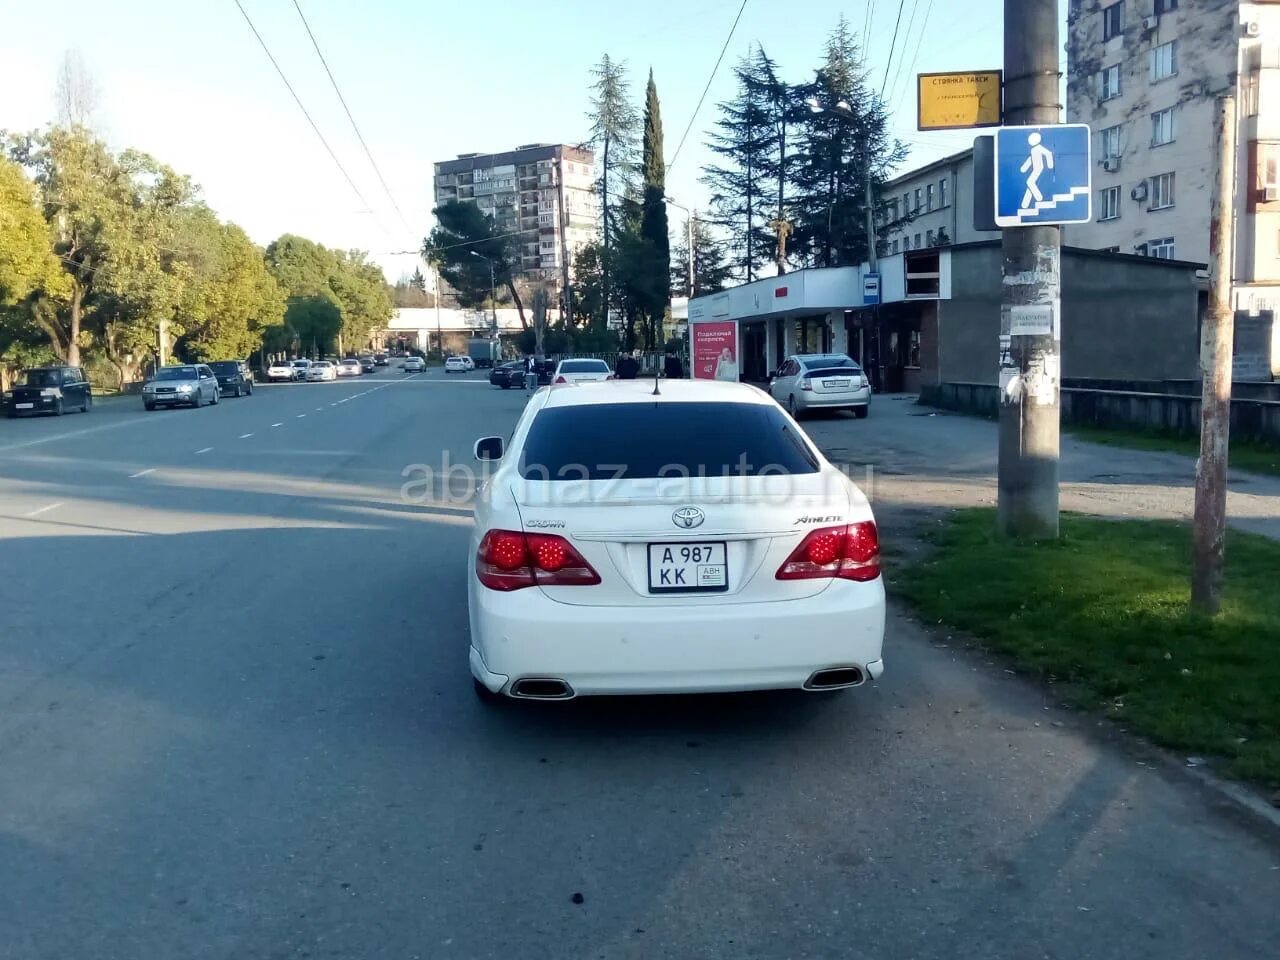 Тойота Абхазия. Абхаз авто. БМВ 525 2019 на абхазских номерах. Как ездить на абхазских номерах